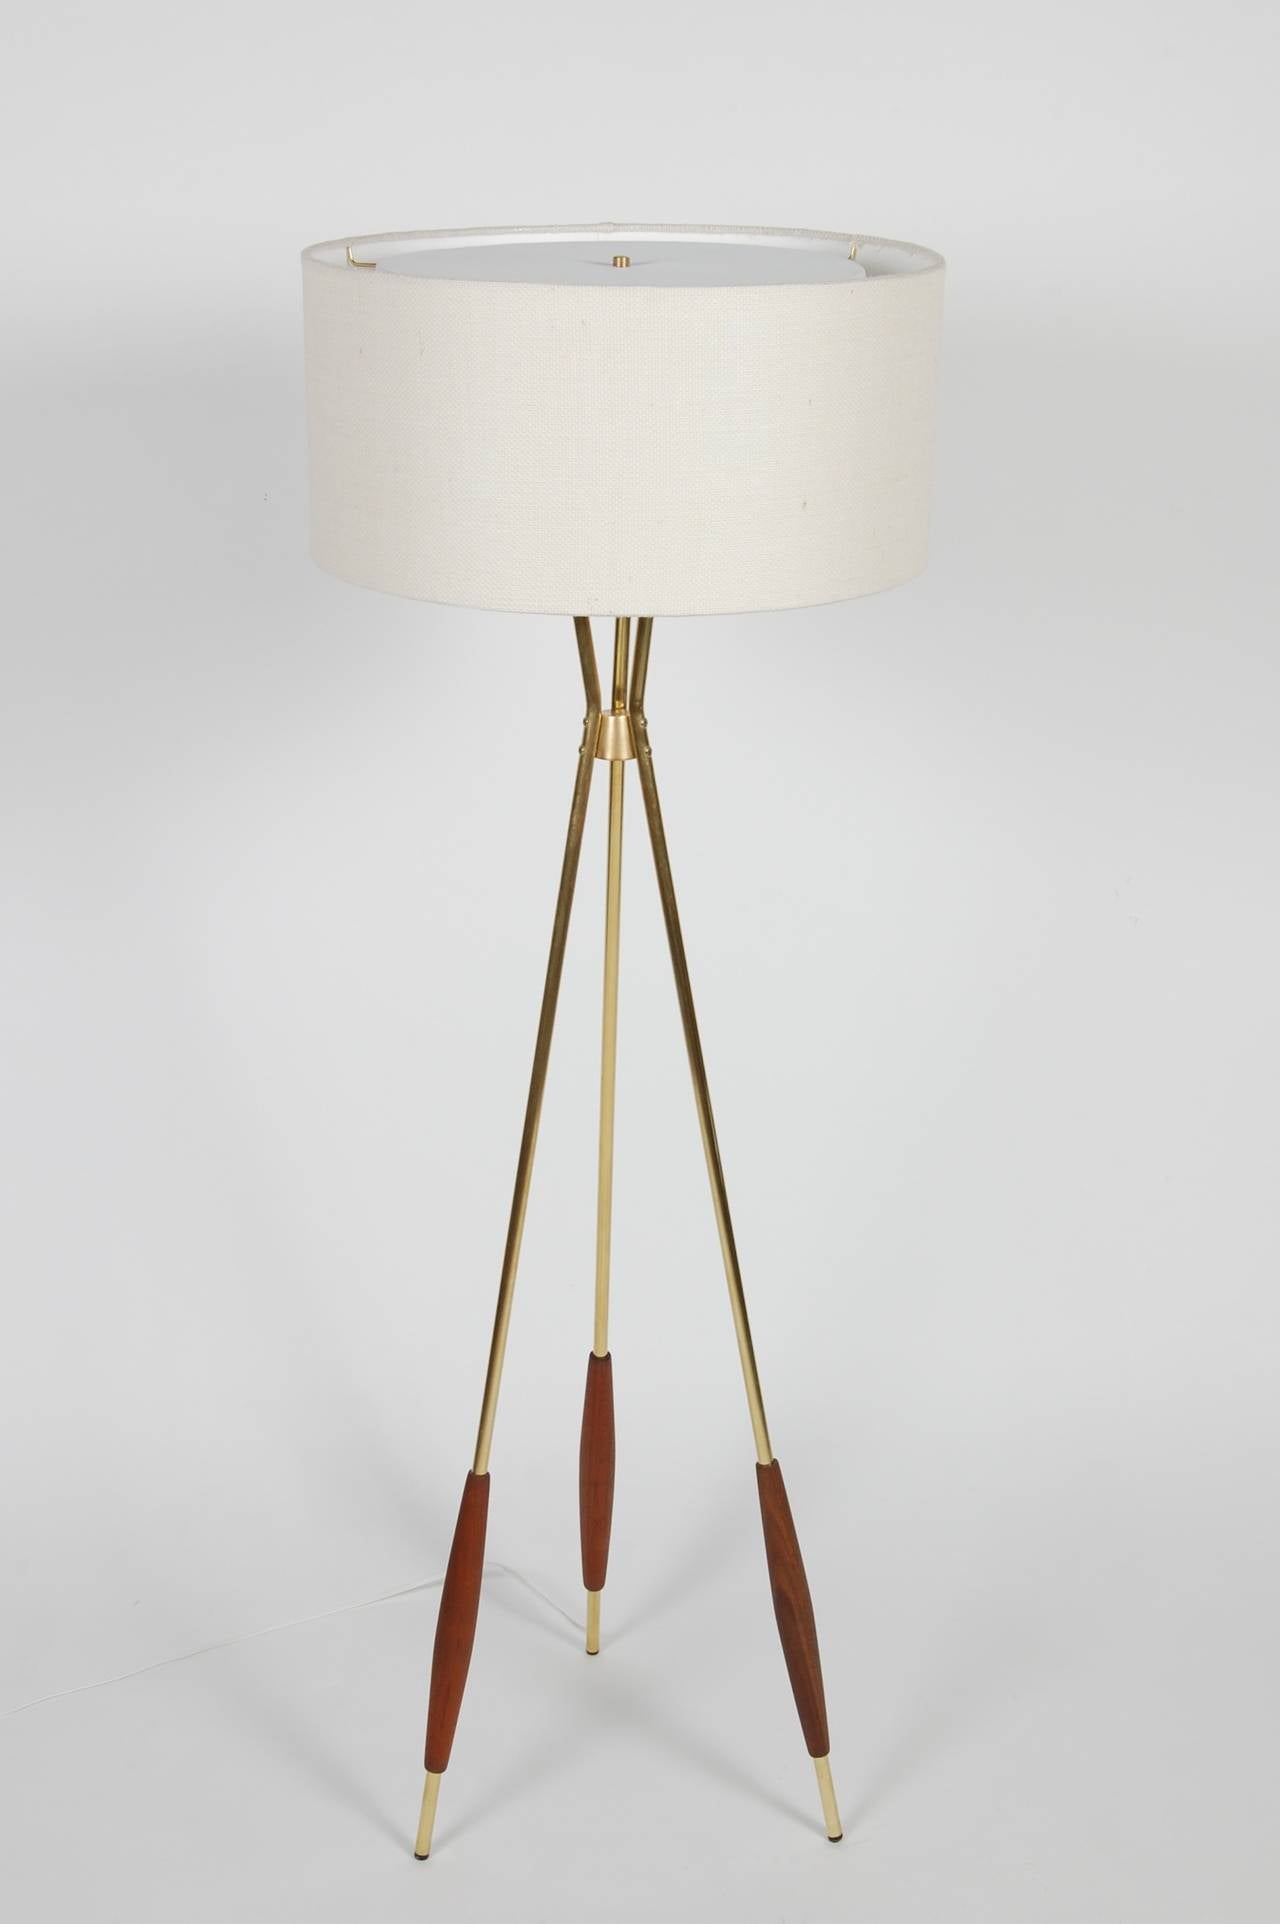 Lightolier Tripod Floor Lamp by Gerald Thurston 1